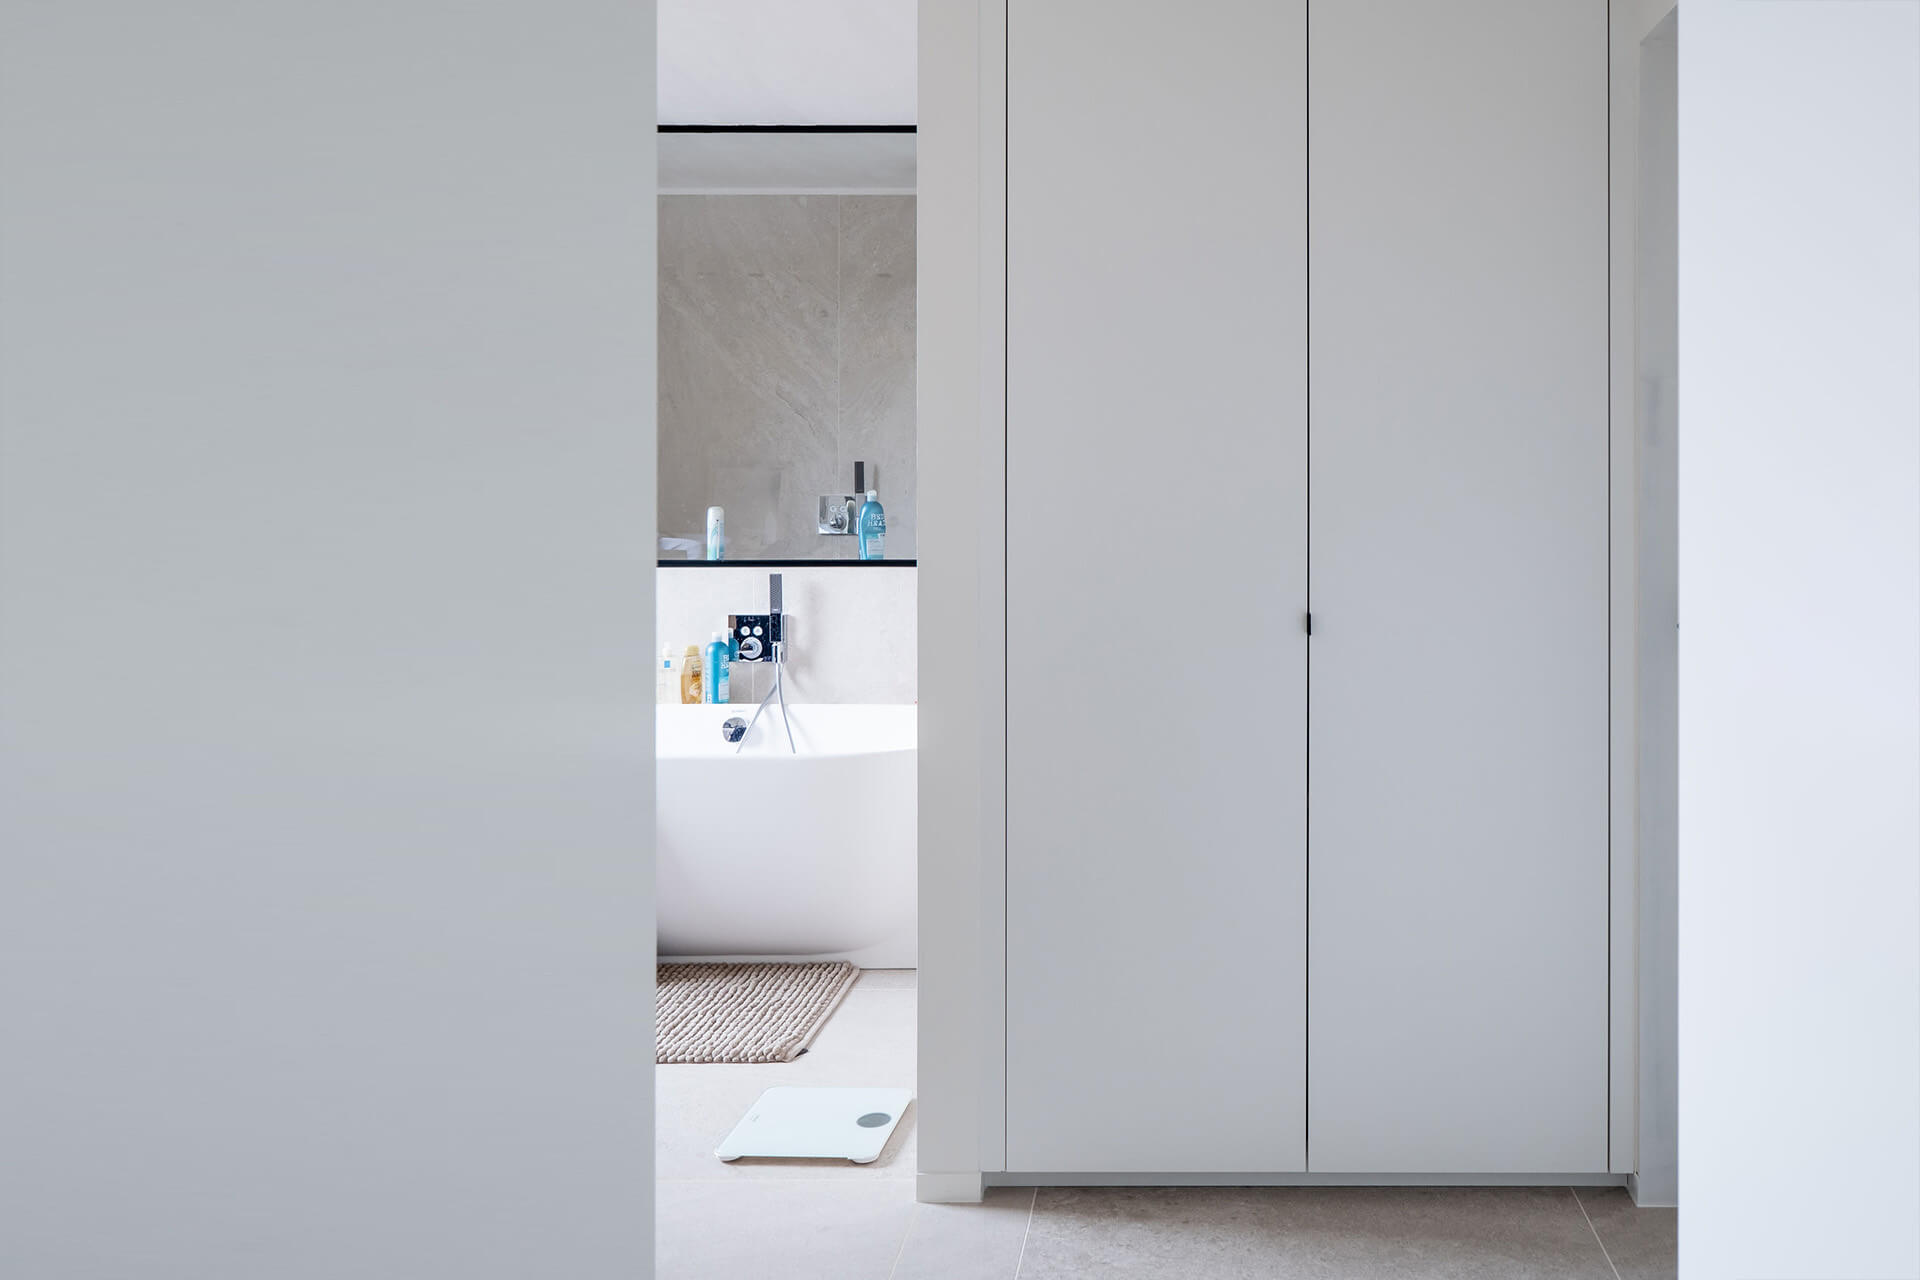 White custom-made storage unit in a bathroom